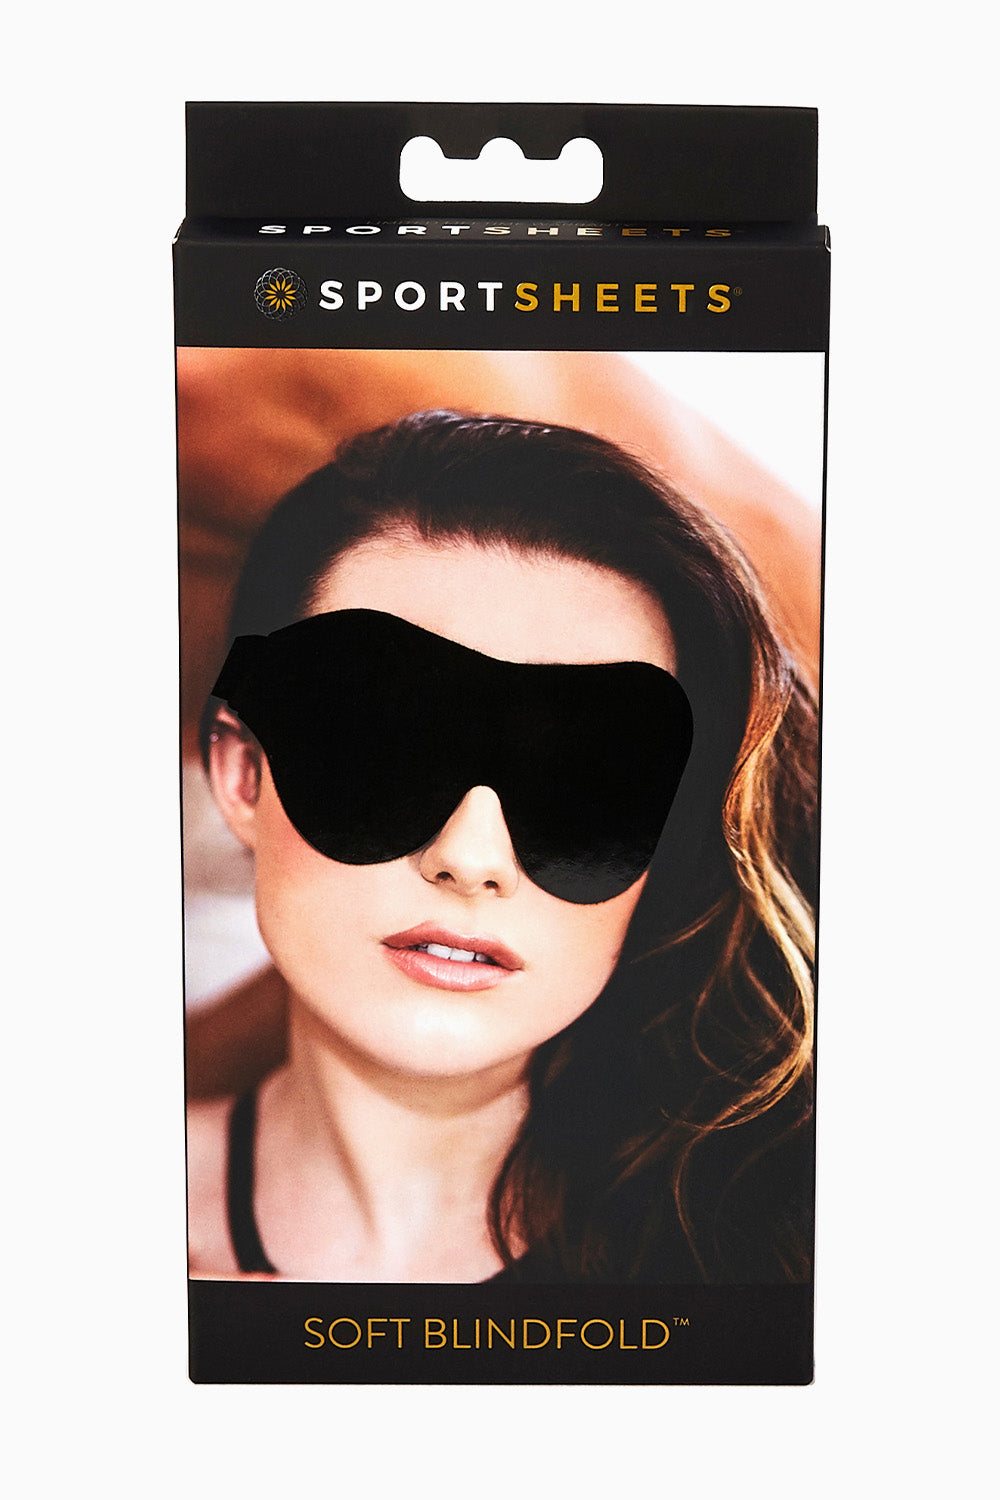 Sportsheets Ultra-Soft Blindfold